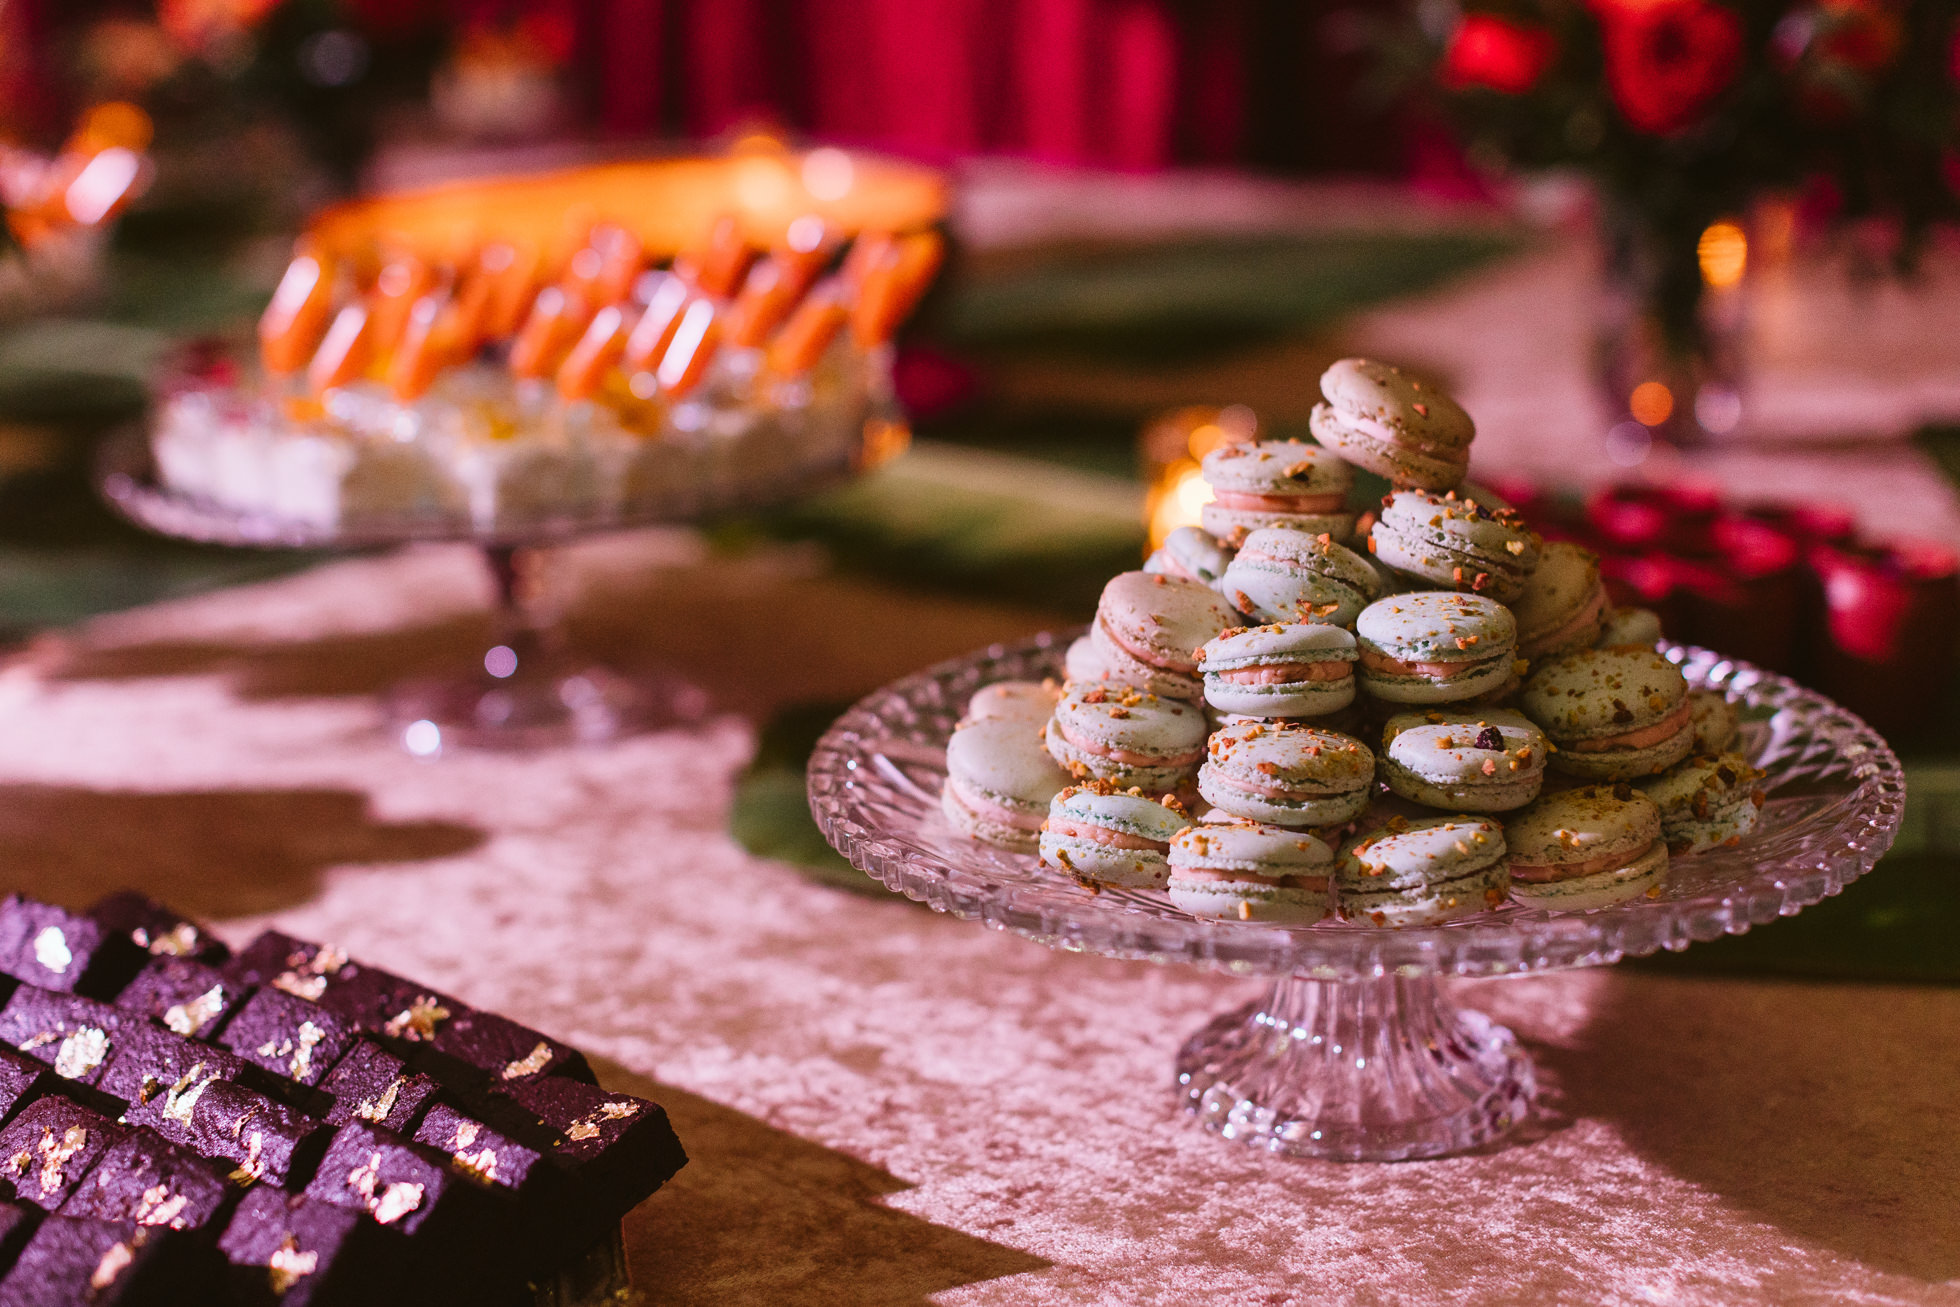 vegan desserts at an Indian wedding at Syon Park Walled Garden